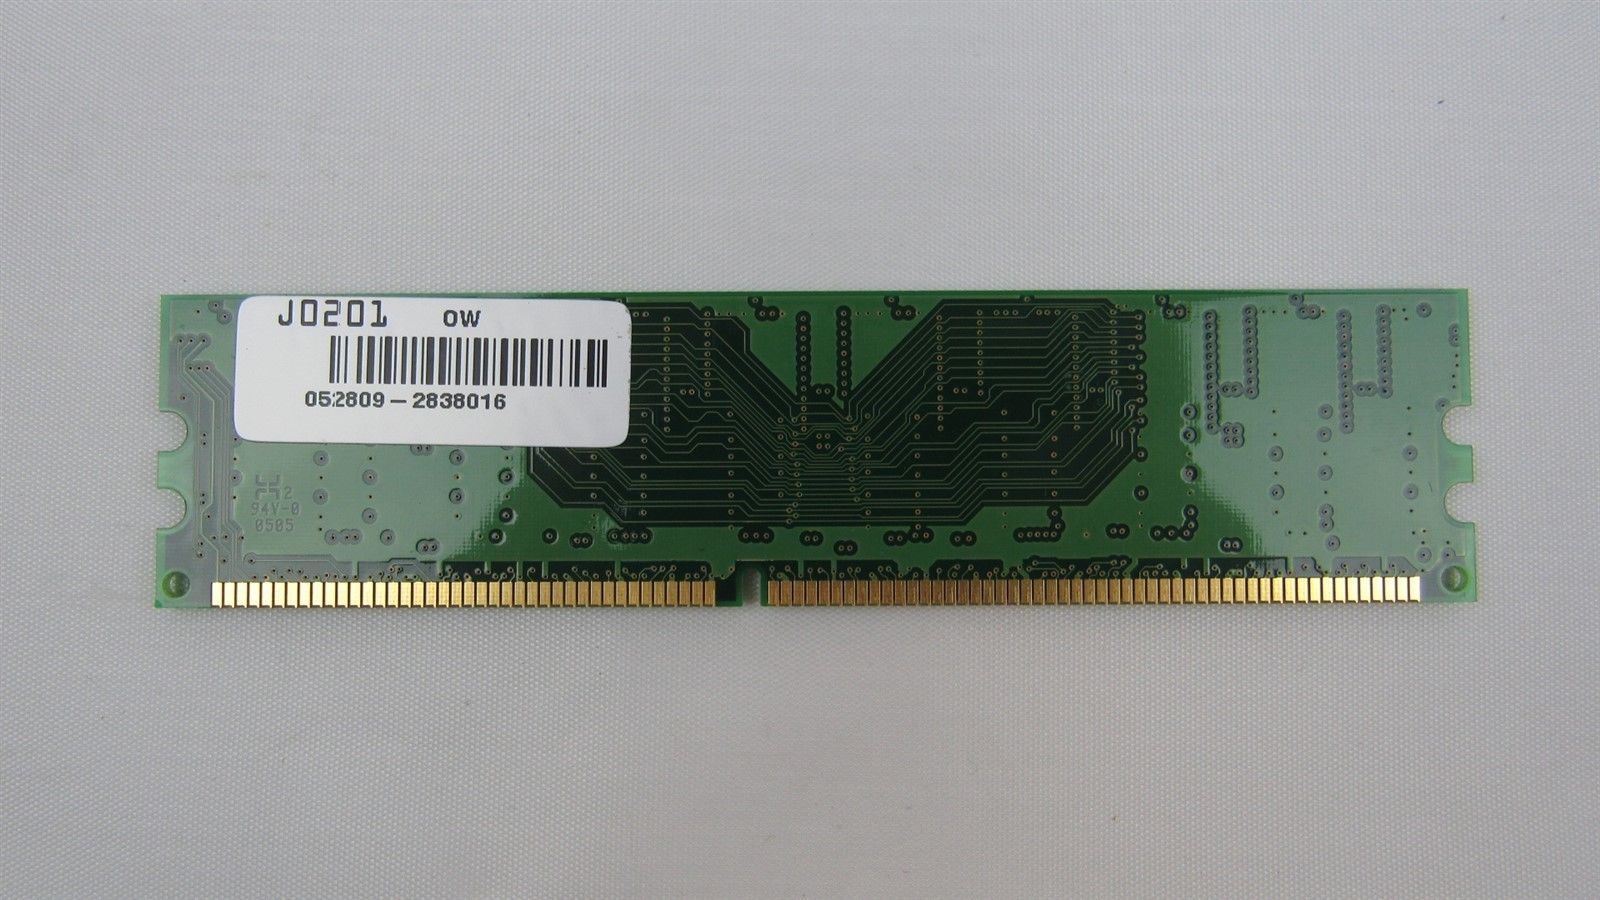 Dell 256MB PC3200 DDR-400MHz non-ECC CL3 184-Pin DIMM Memory J0201 0J0201